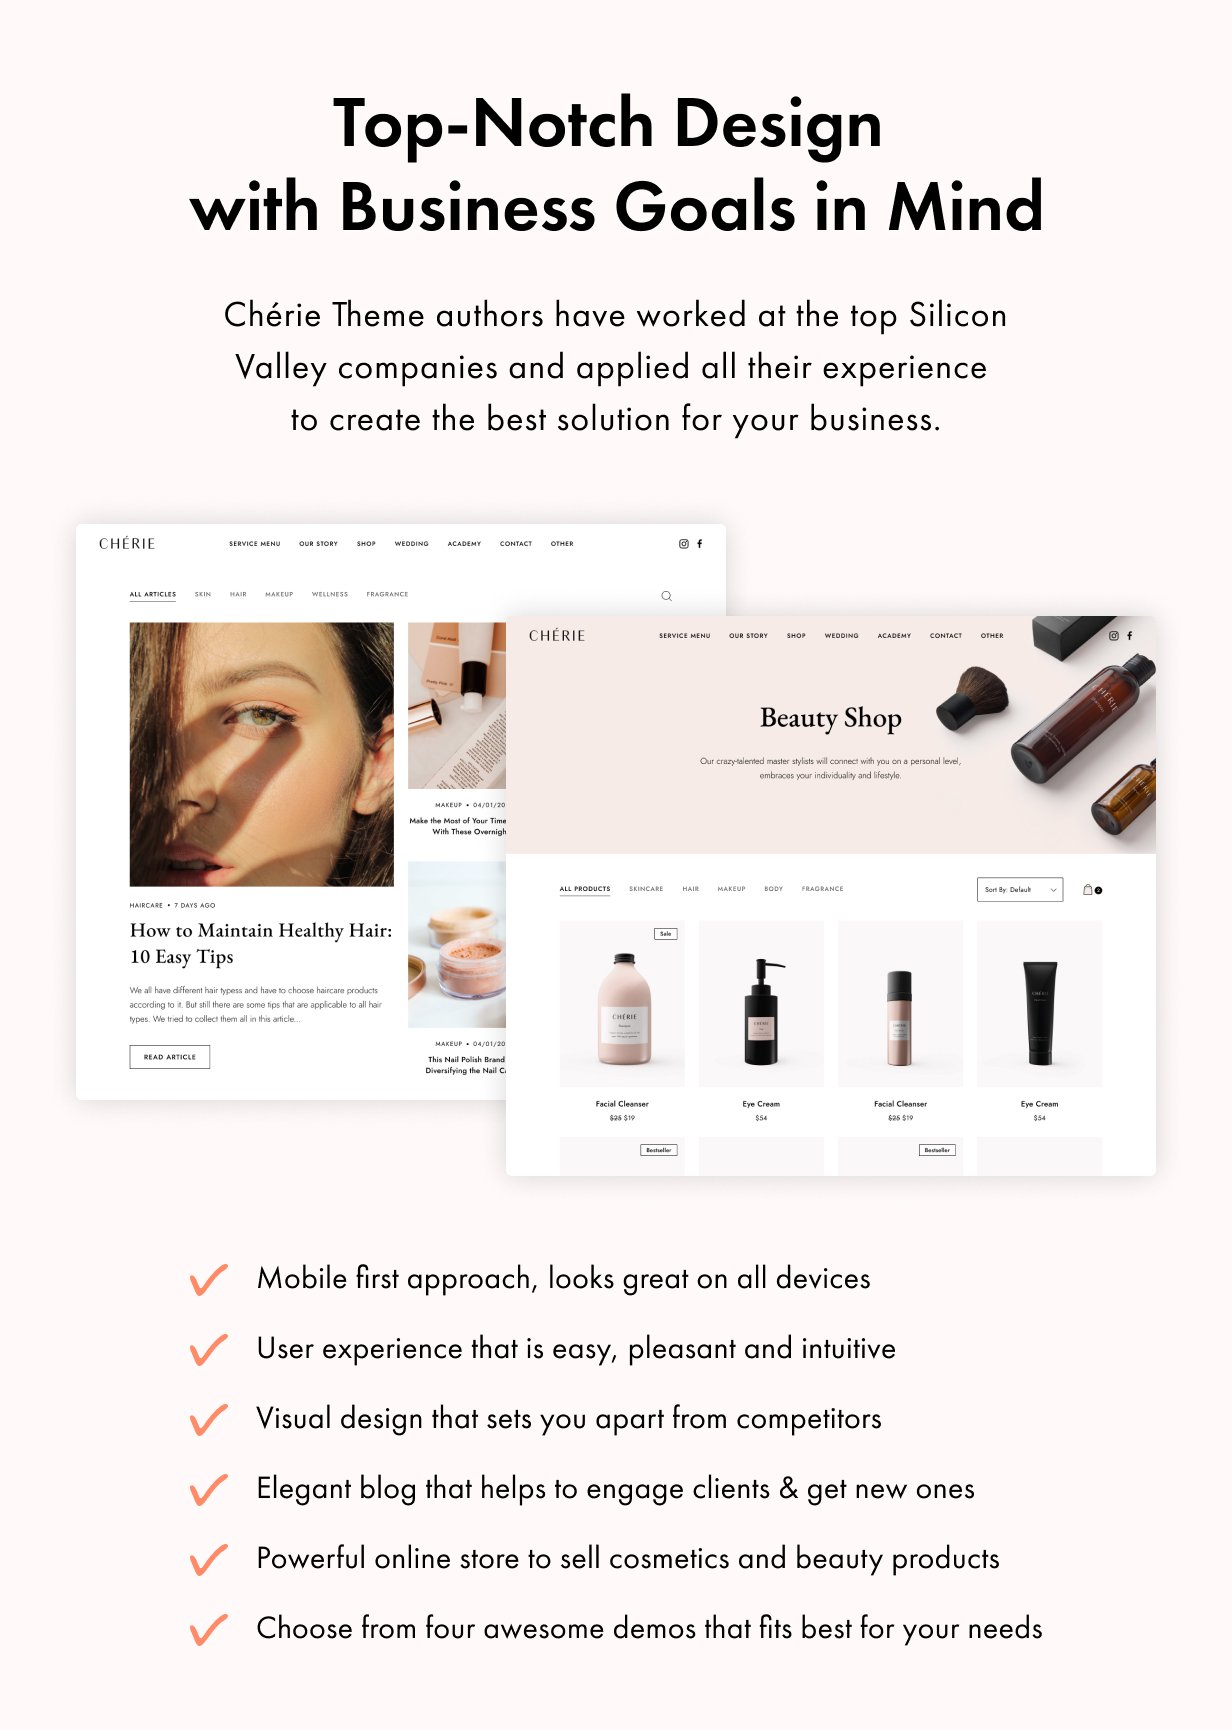 Chérie — Beauty Salon and Spa